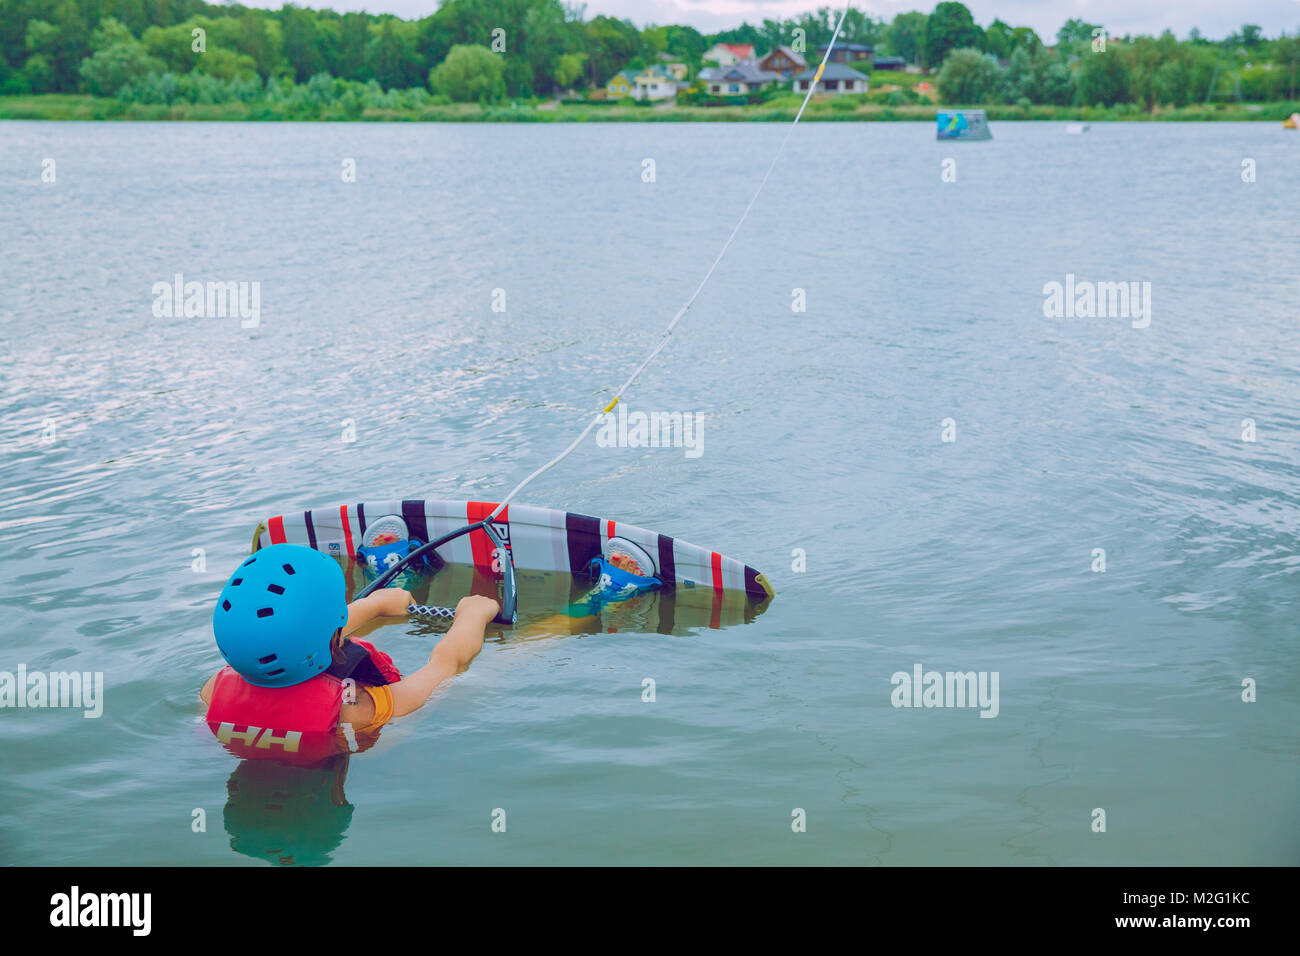 City Siauliai, Lithuania, water sport, woman wakebording, lake an fresh air. Travel photo. 2016 Stock Photo